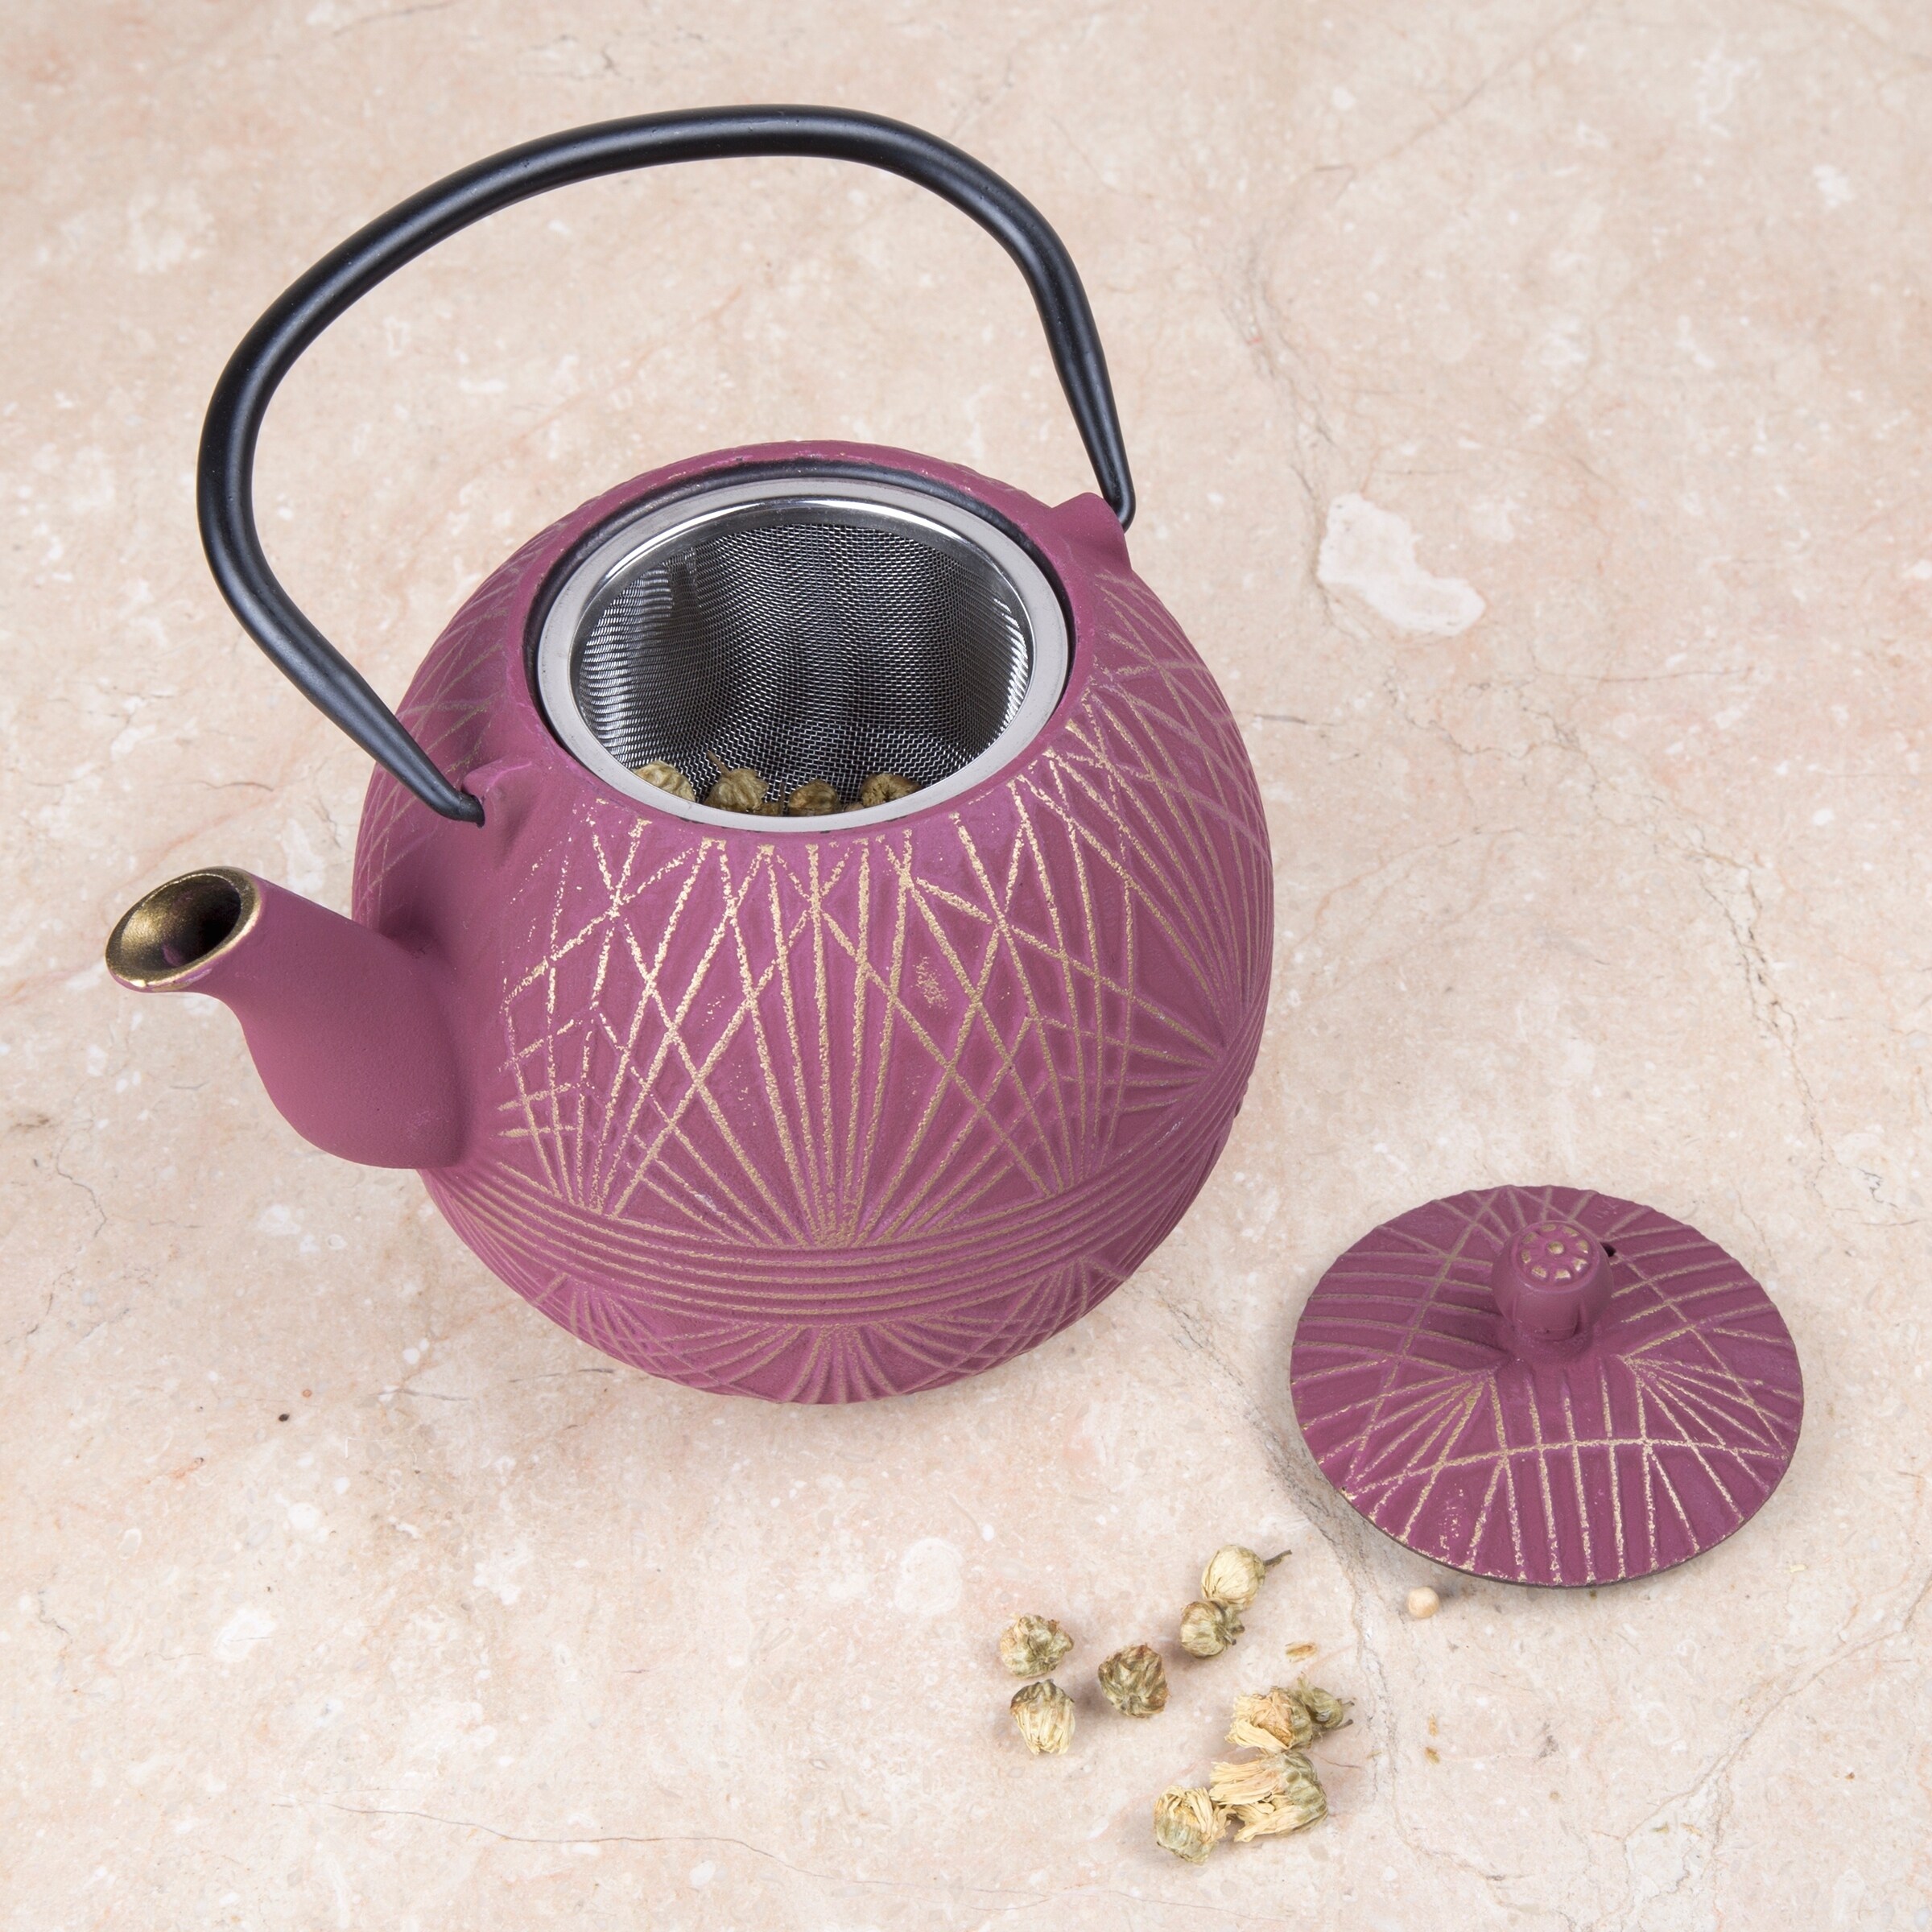 https://ak1.ostkcdn.com/images/products/30263400/Creative-Home-34-oz-Cast-Iron-Tea-Pot-New-Gold-and-Purple-Color-14a9e977-a987-4433-a7cf-1ae153bf9729.jpg